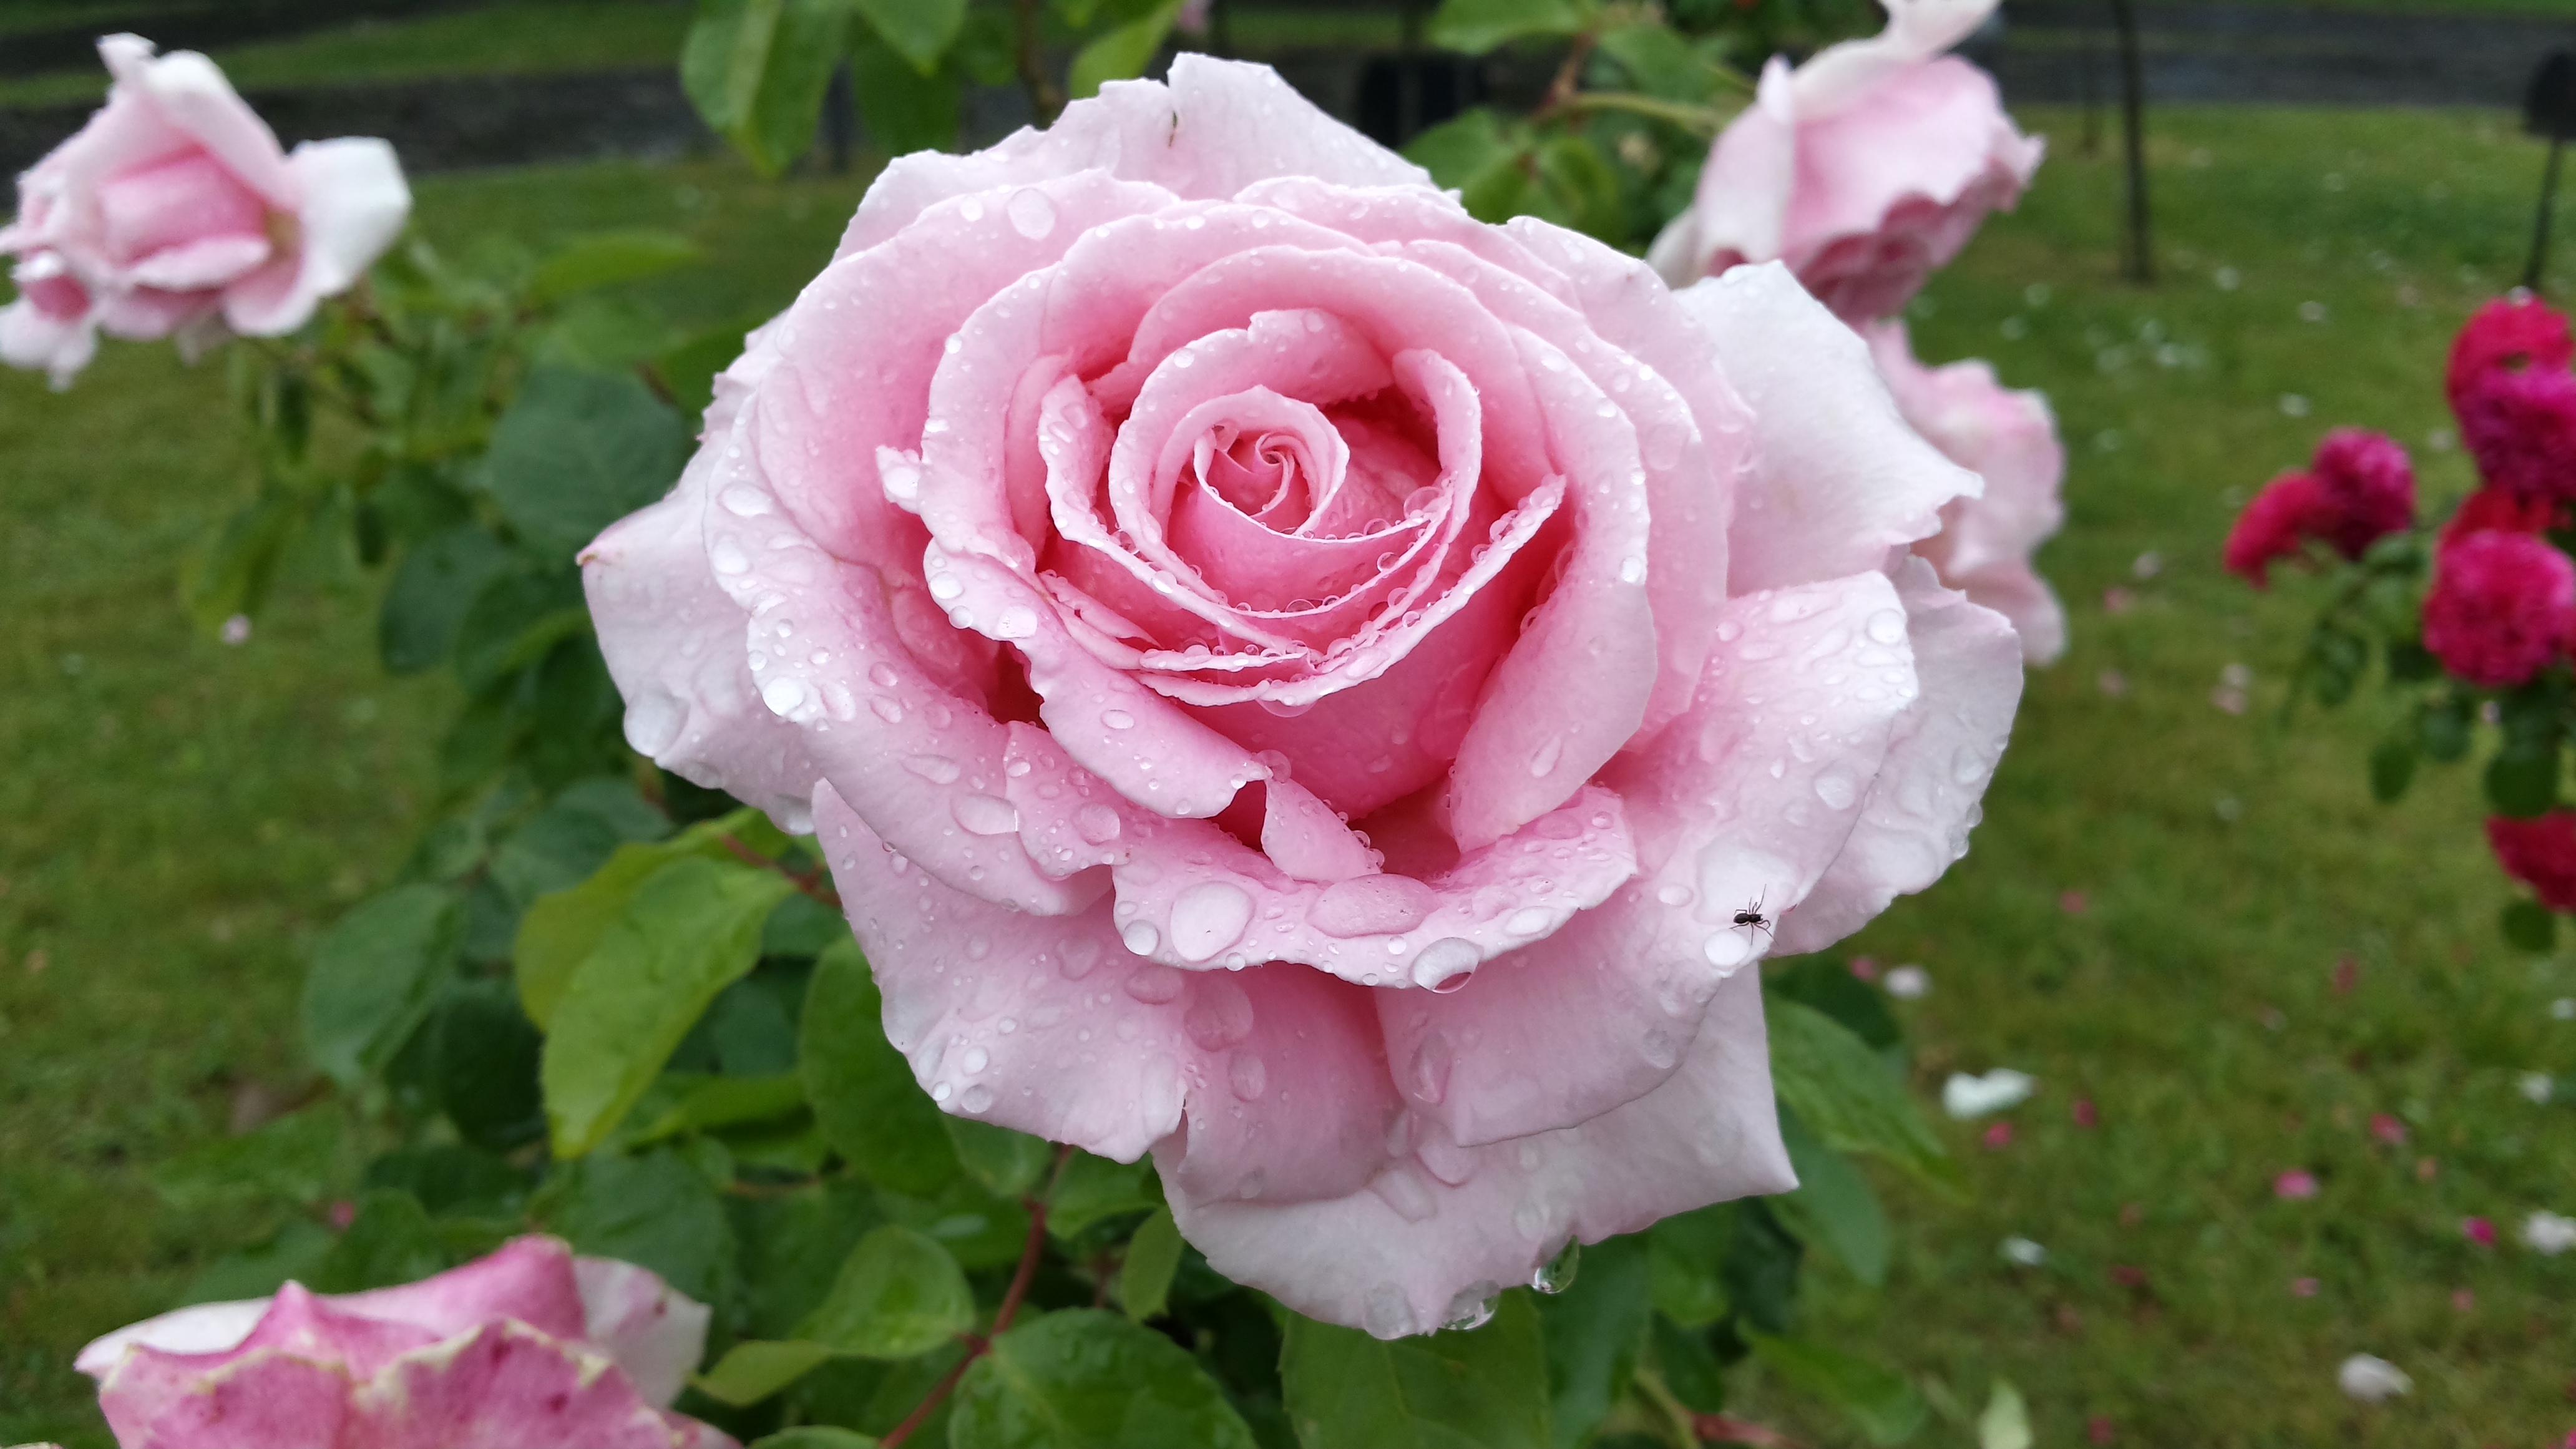 File:Light pink rose.1.jpg - Wikimedia Commons